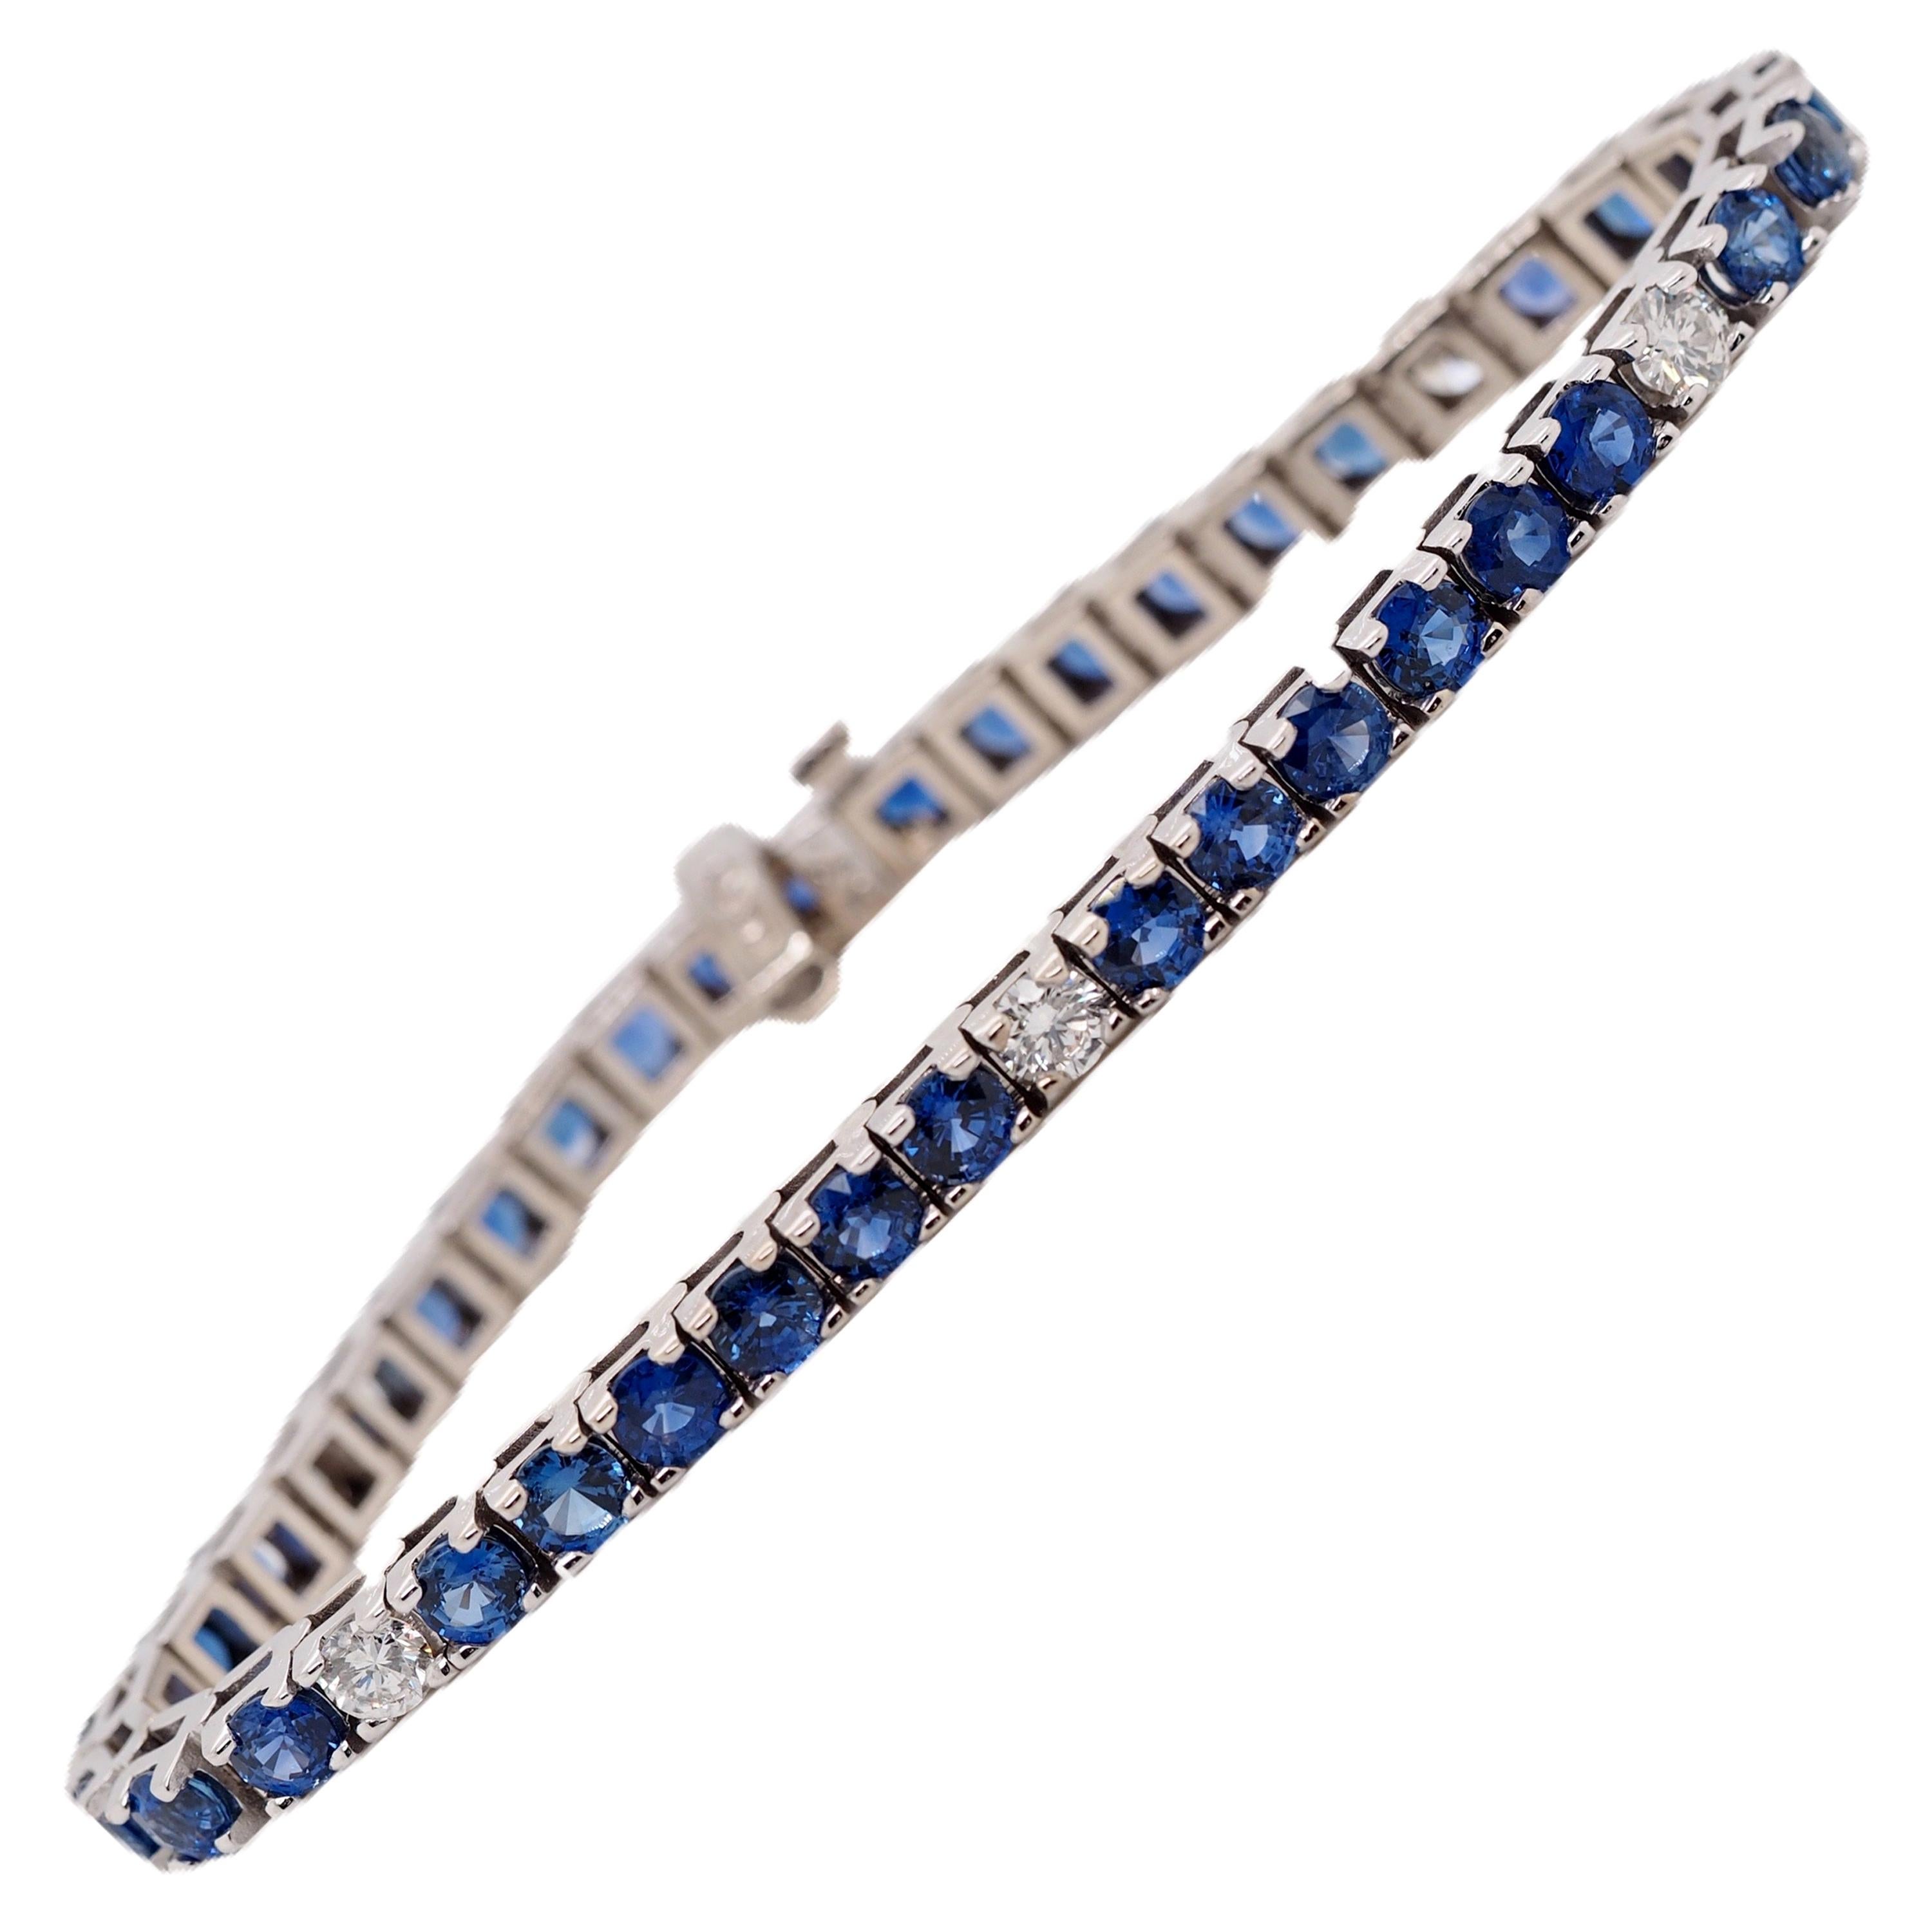 12 Carat Blue Sapphire and Diamond Tennis Bracelet